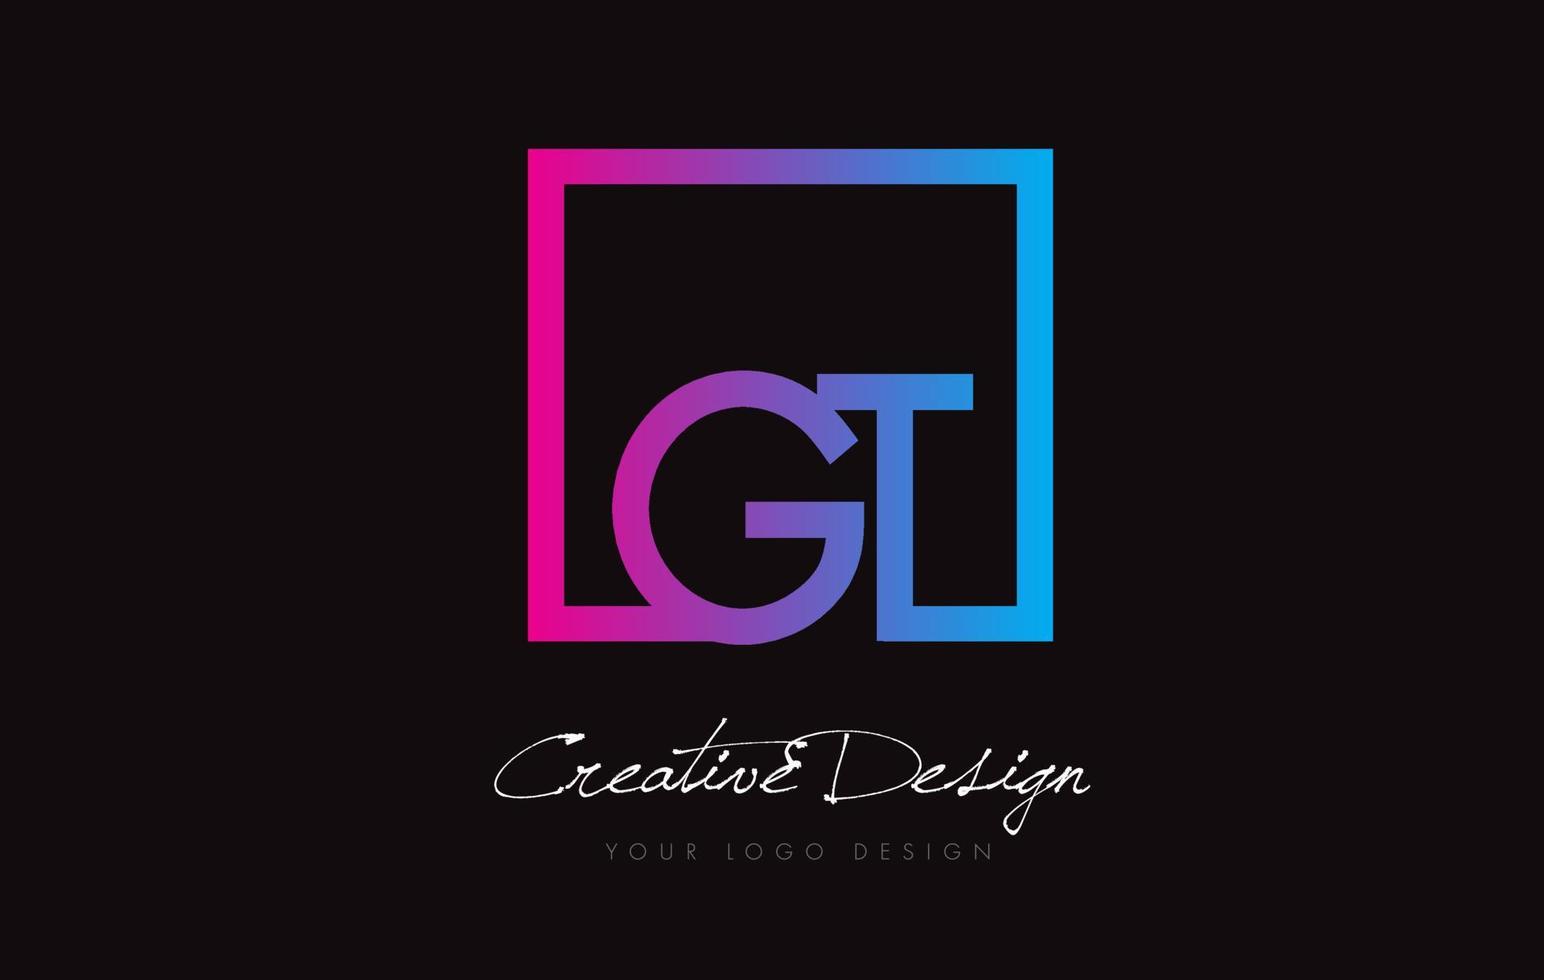 GT Square Frame Letter Logo Design with Purple Blue Colors. vector